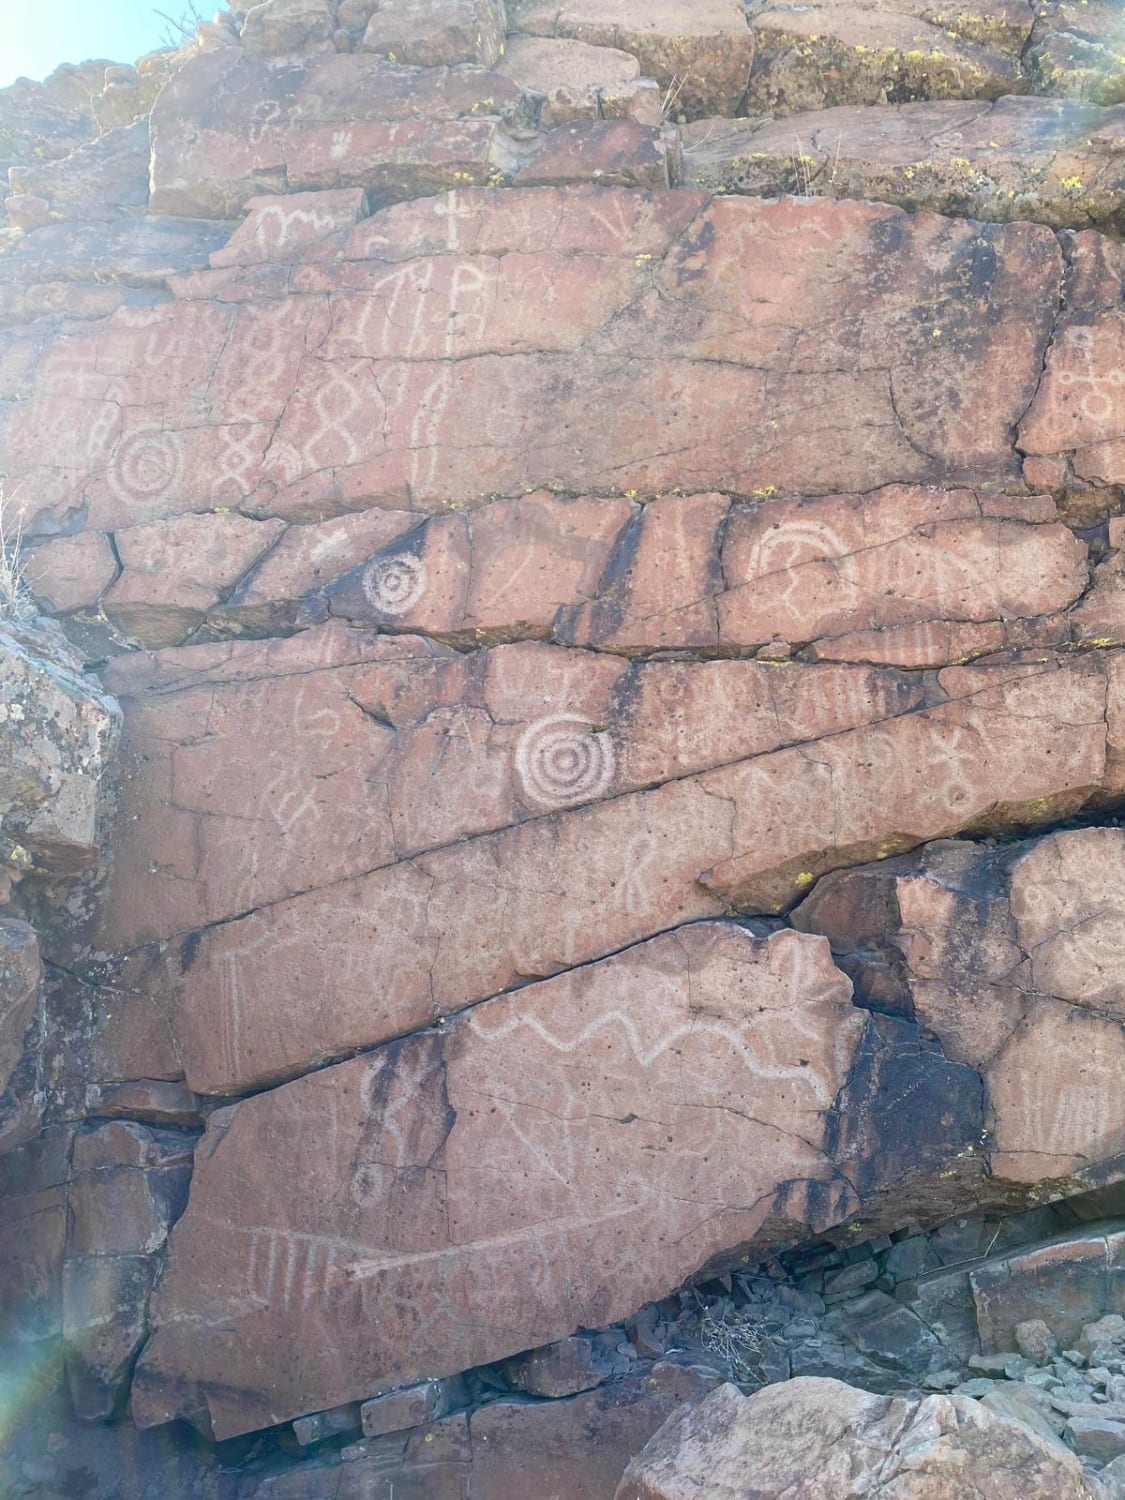 Spanish Springs Petroglyphs 